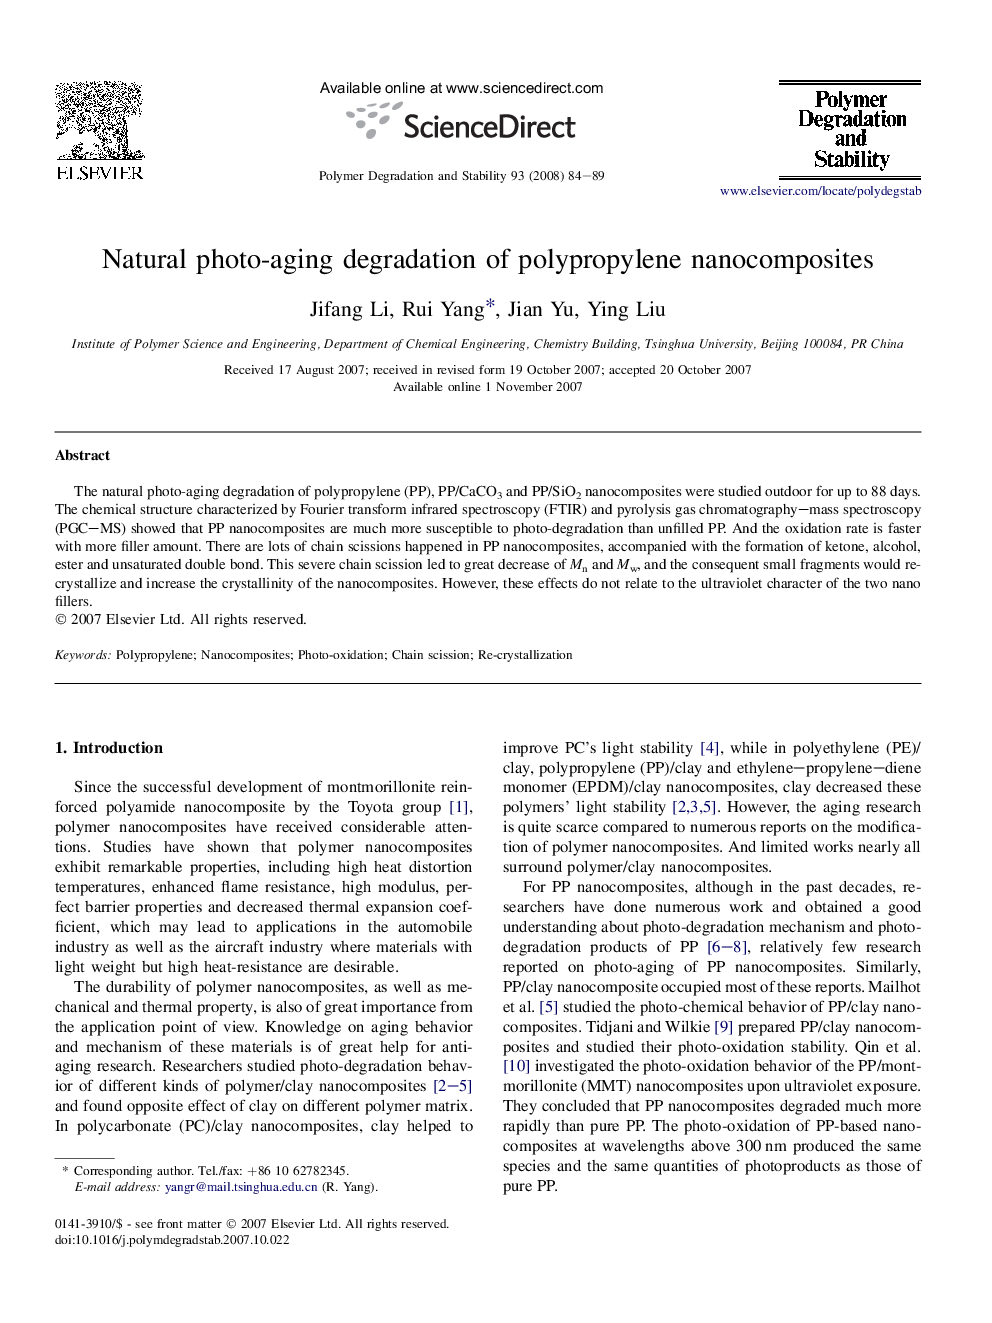 Natural photo-aging degradation of polypropylene nanocomposites